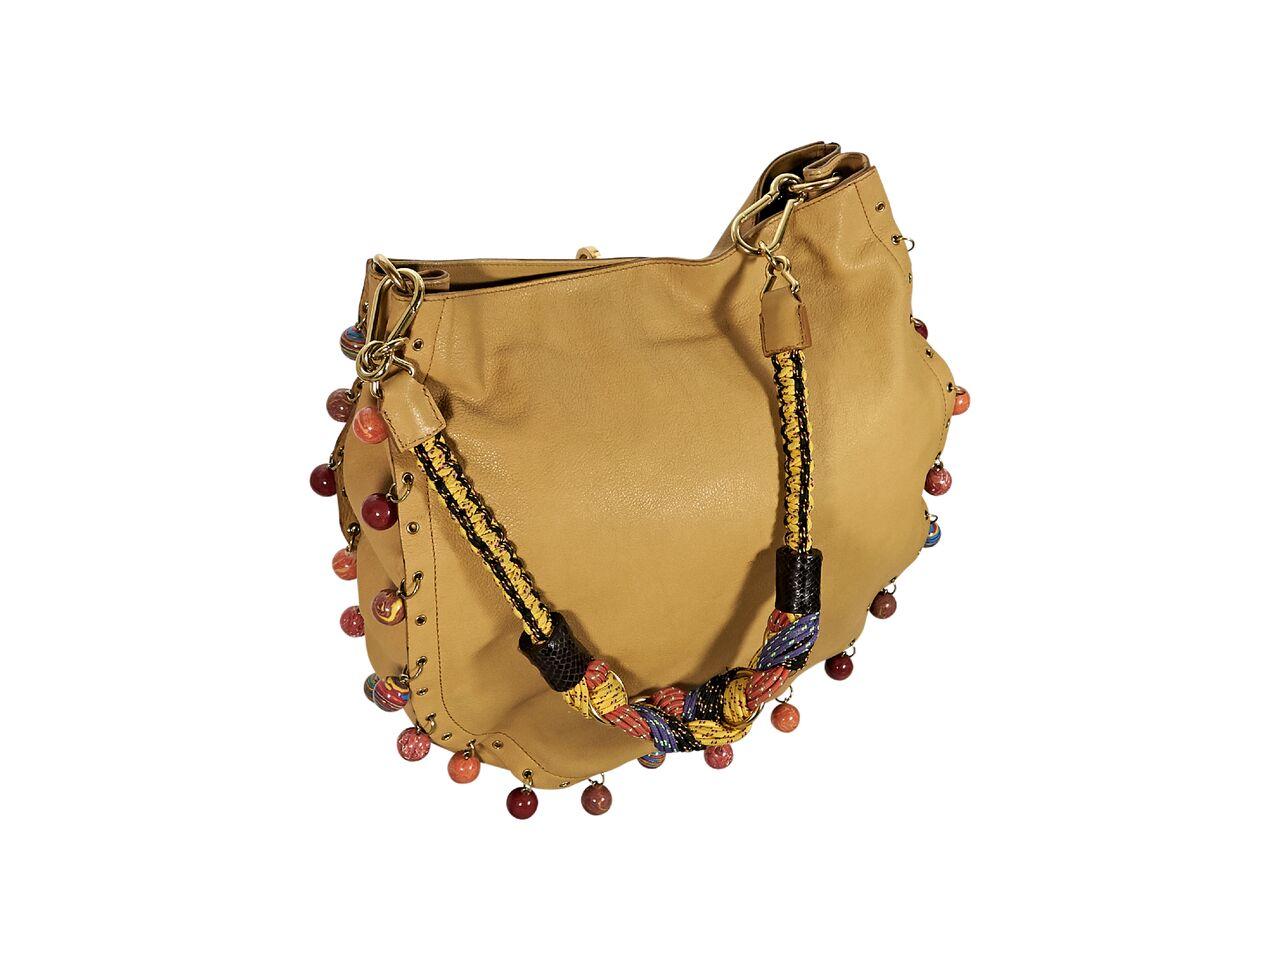 Product details:  Tan leather shoulder bag by Marc Jacobs.  Trimmed with multicolor beads.  Detachable shoulder strap.  Concealed magnetic snap closure.  Goldtone hardware.  13